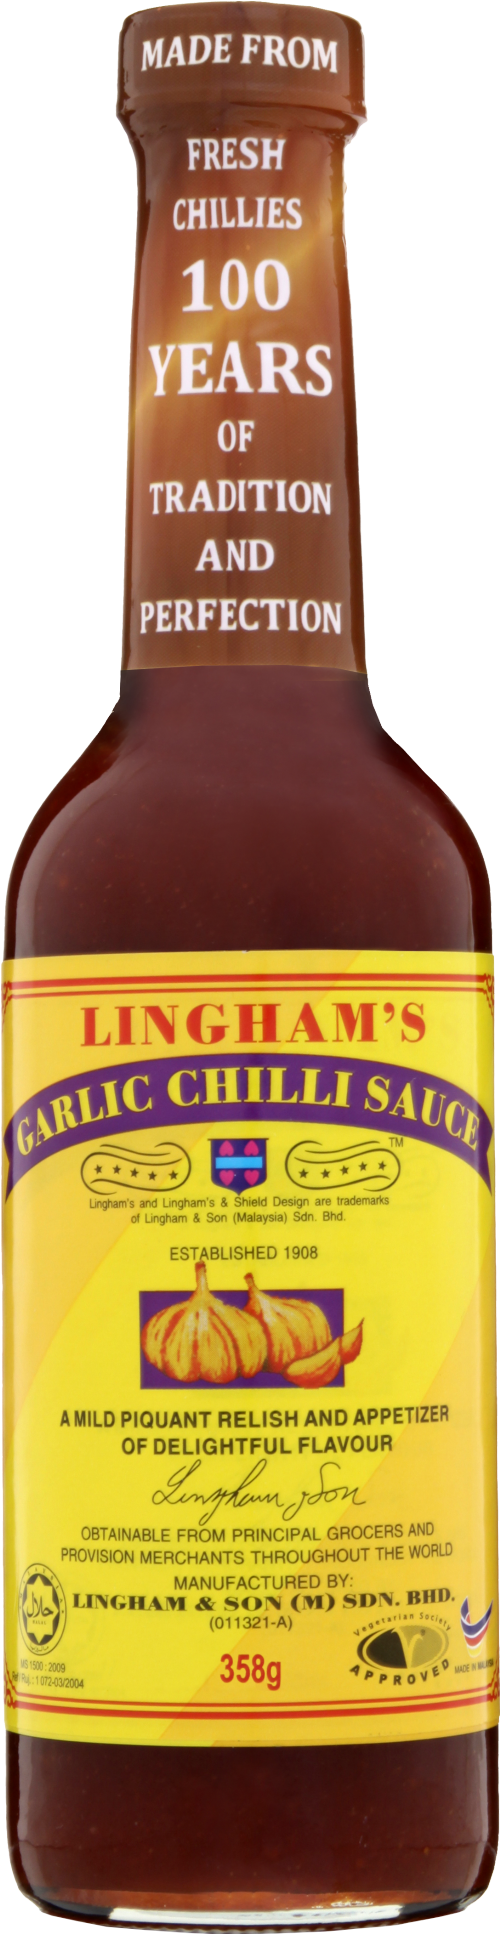 LINGHAM'S Garlic Chilli Sauce 358g